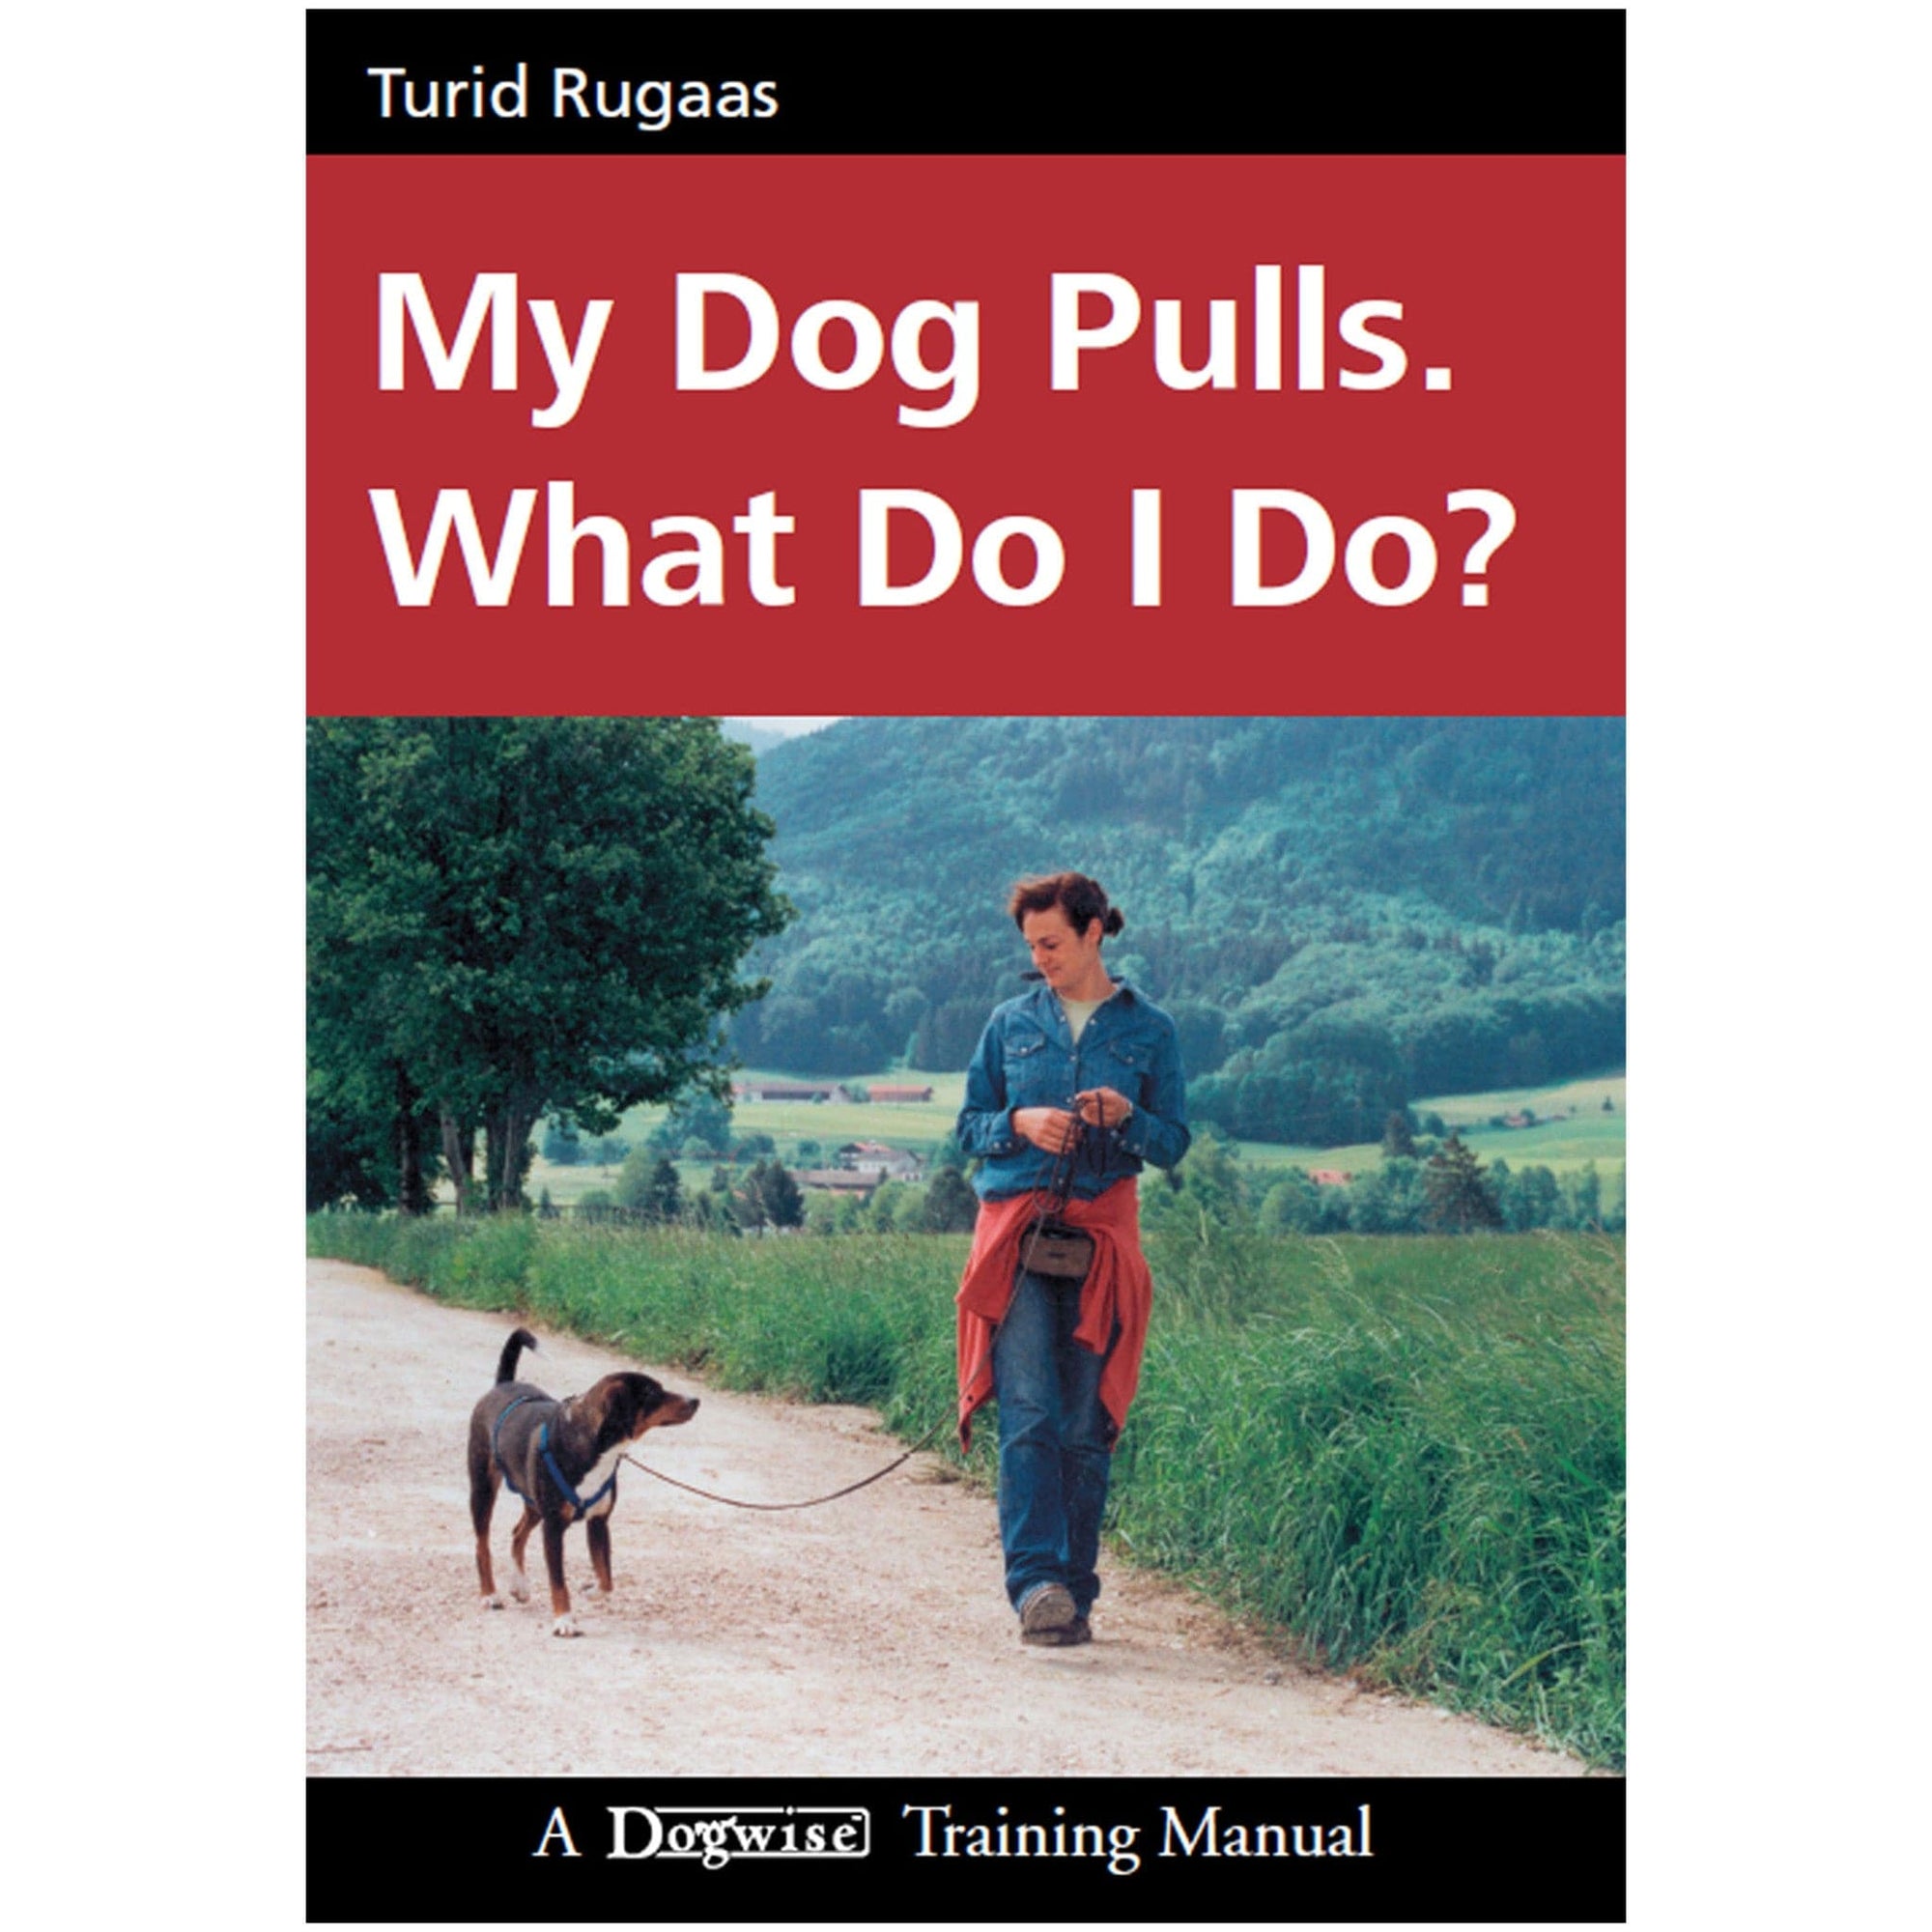 E-BOOK My Dog Pulls. What Do I Do? by Turid Rugaas